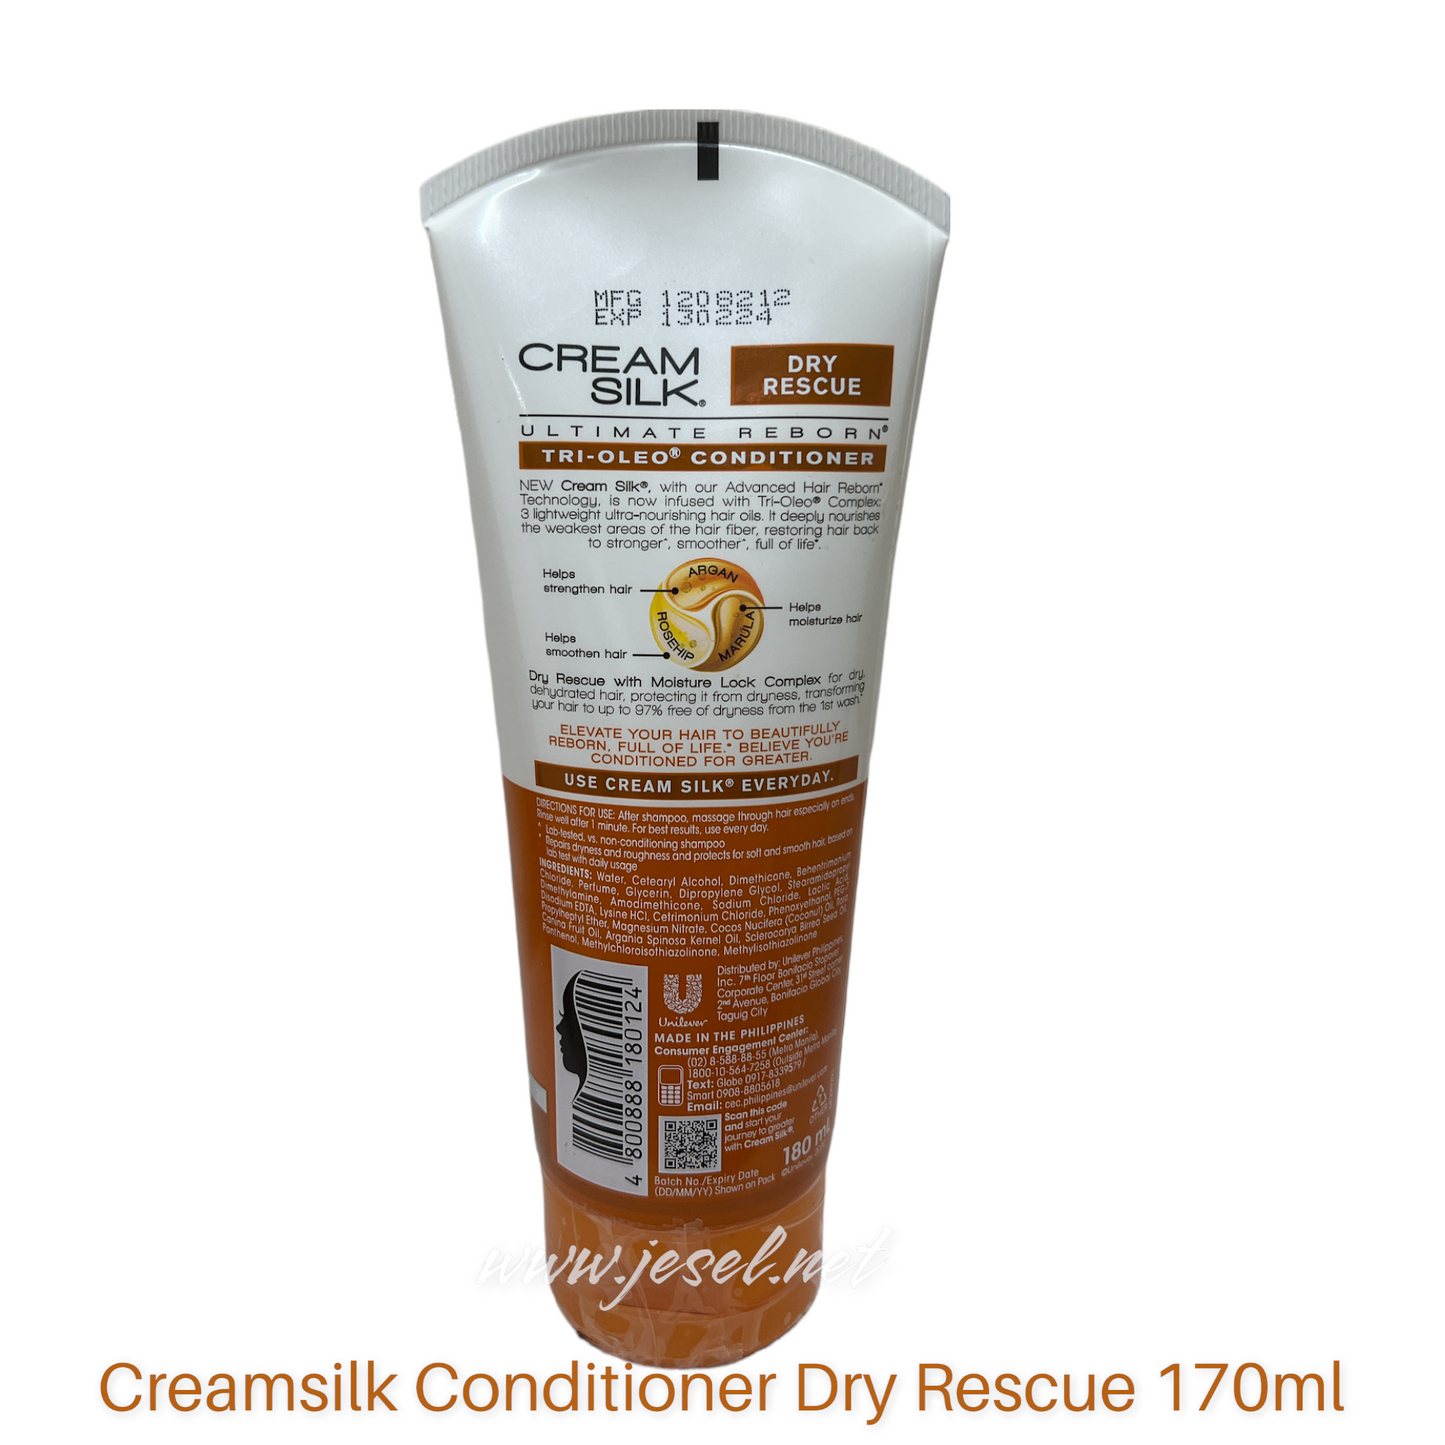 Creamsilk Ultimate Reborn Dry Rescue Conditioner 170ml